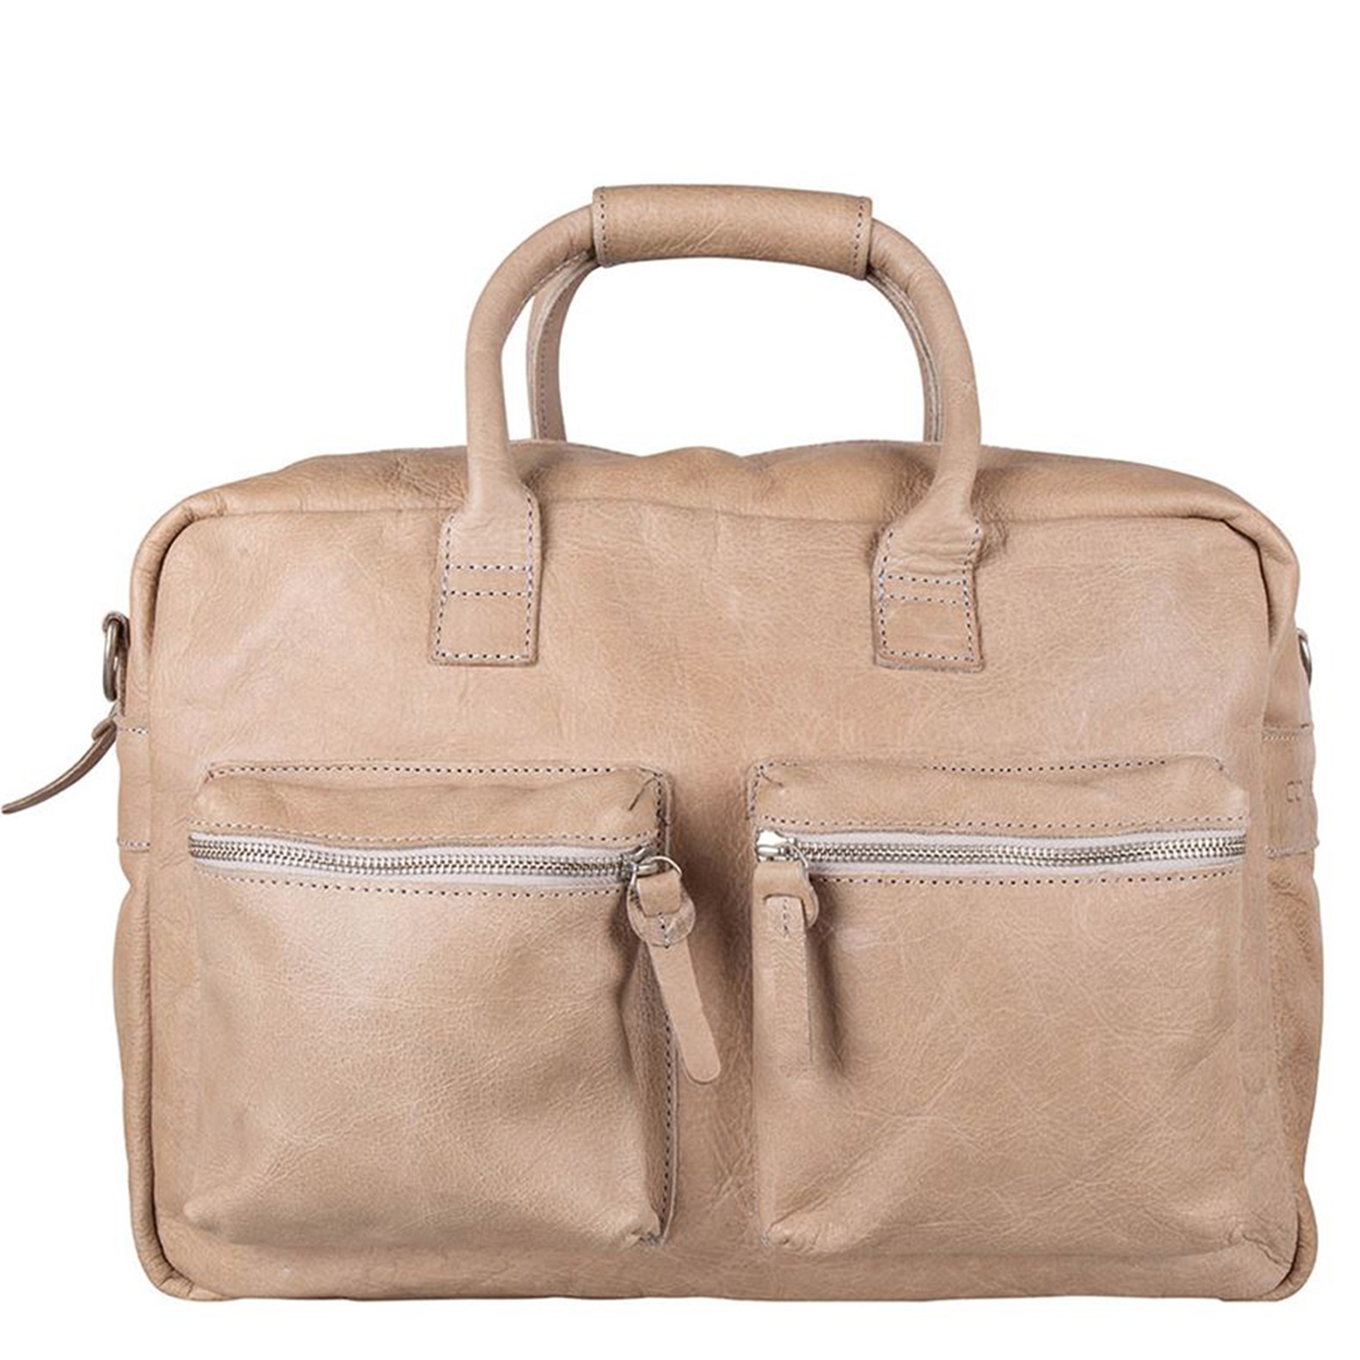 Cowboysbag Bag sand | Travelbags.nl